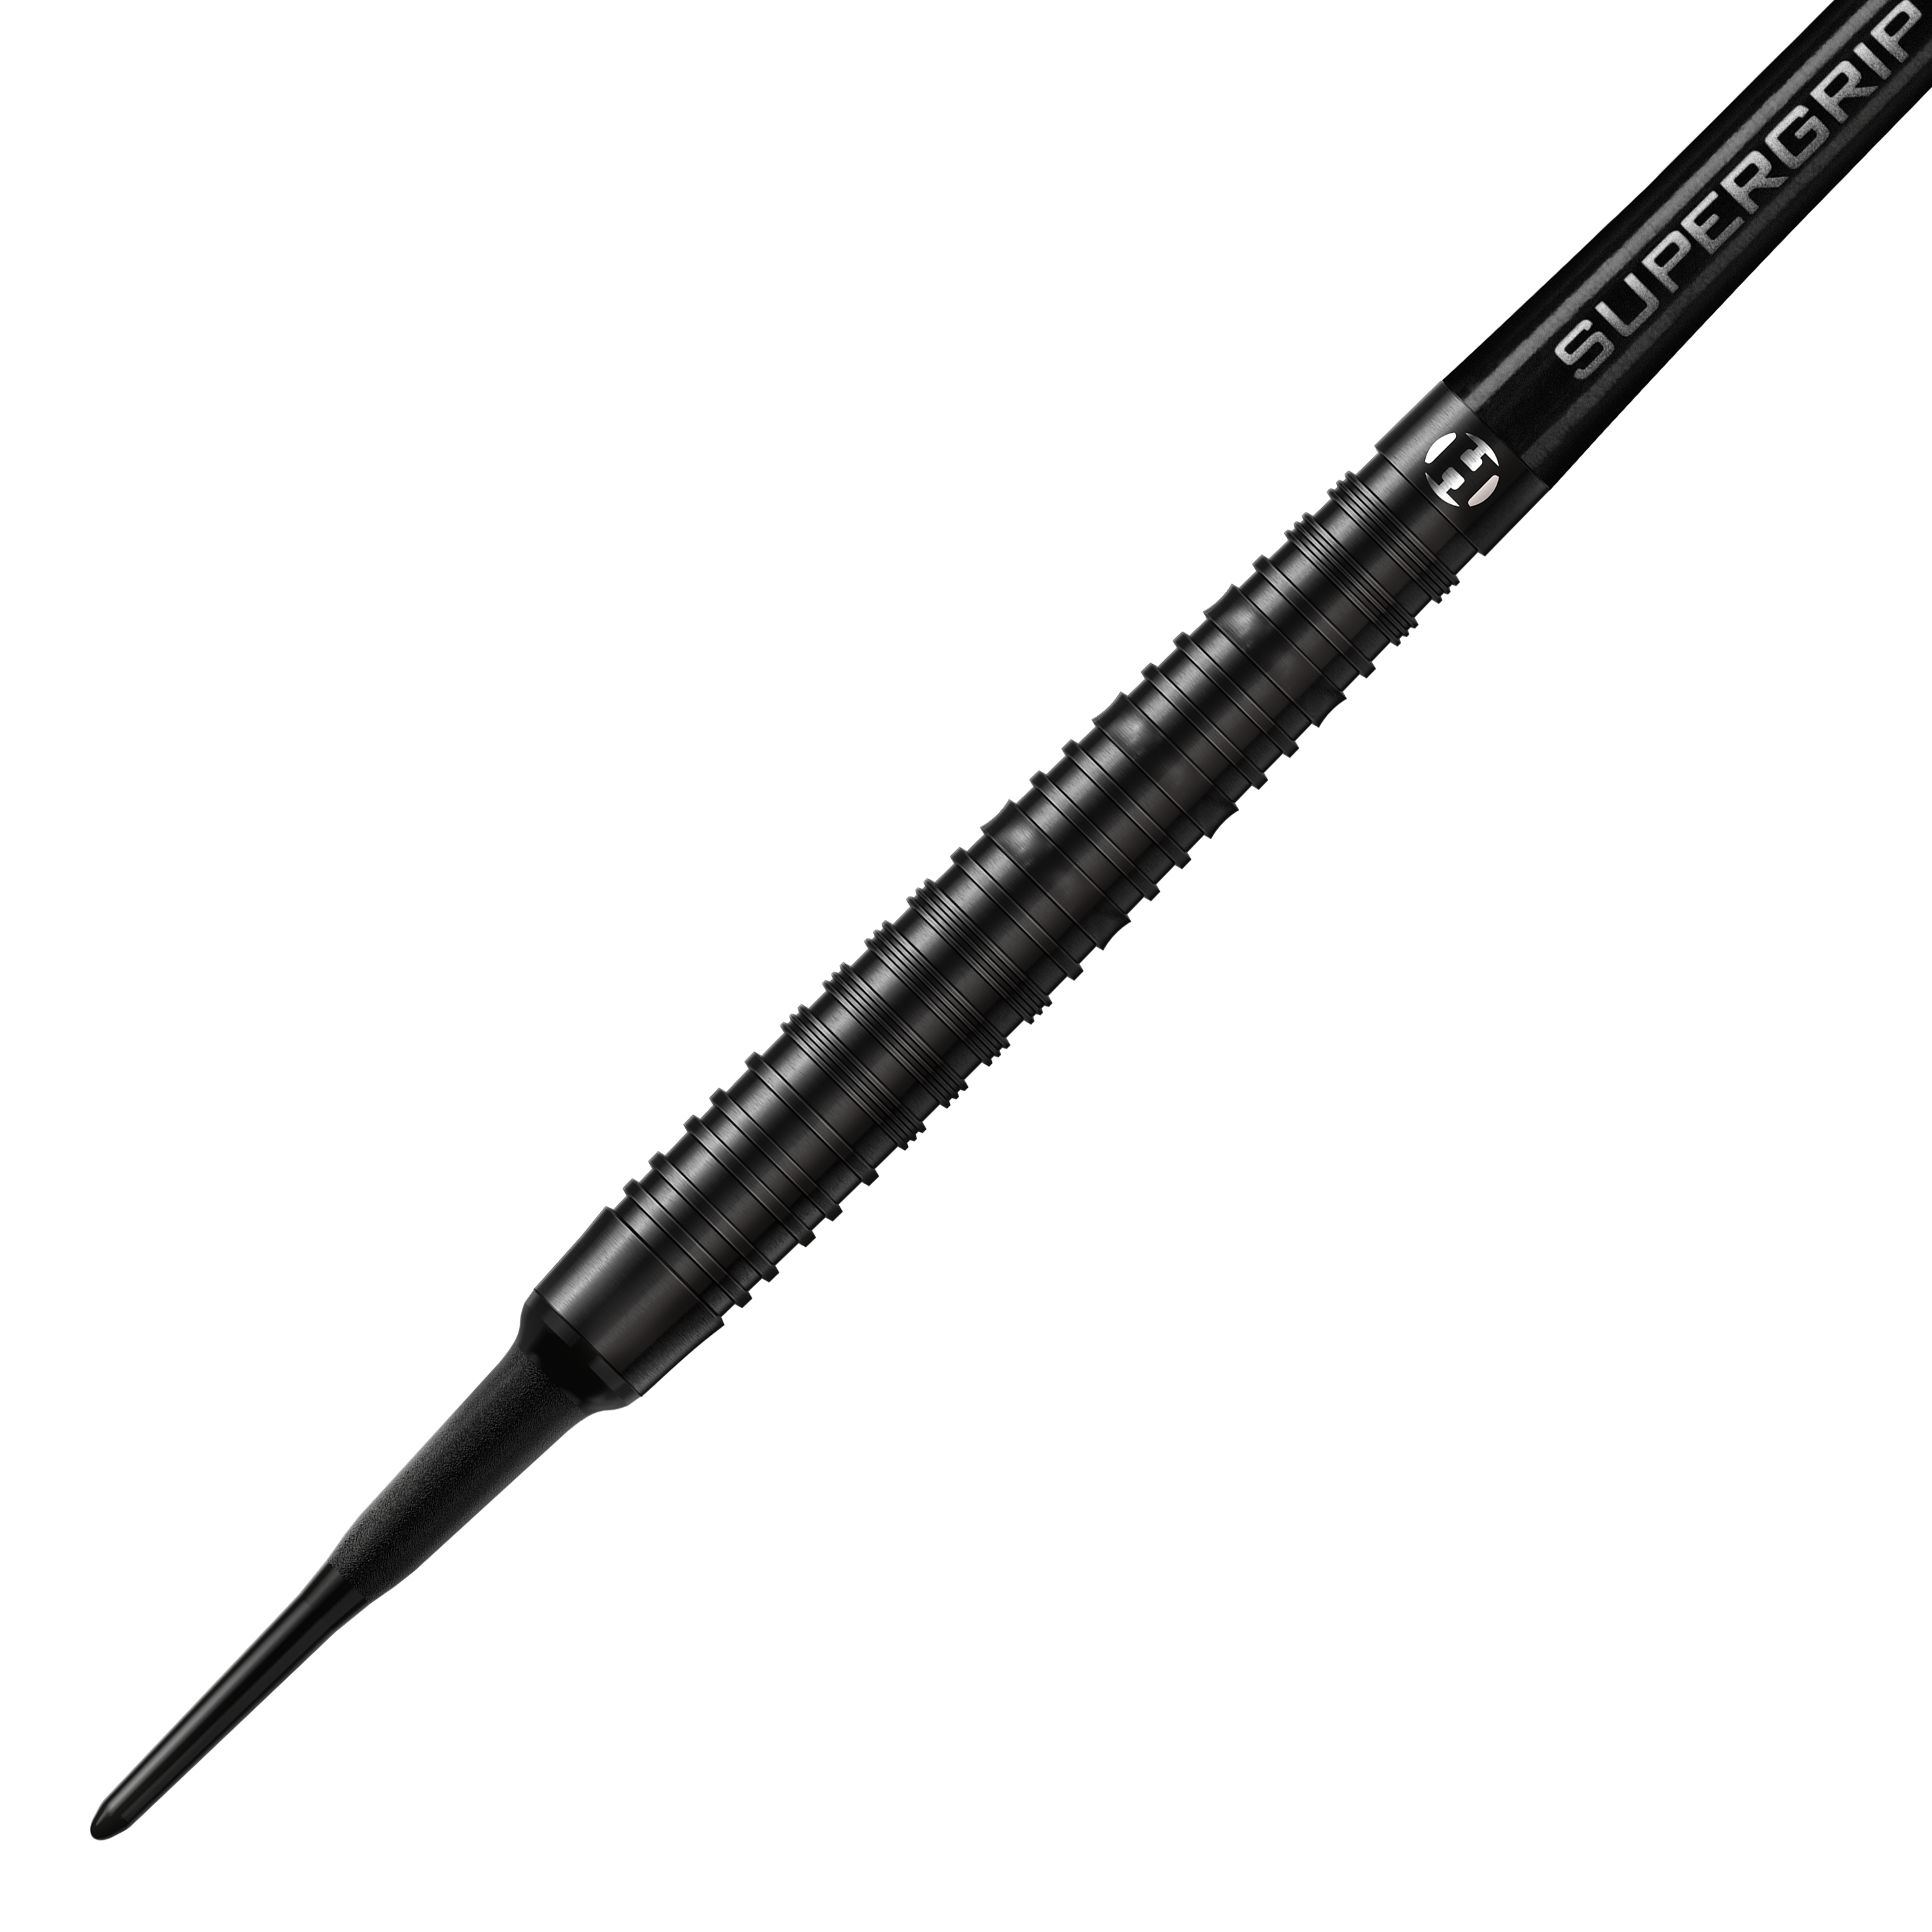 Miękkie rzutki Harrows NX90 Black Edition